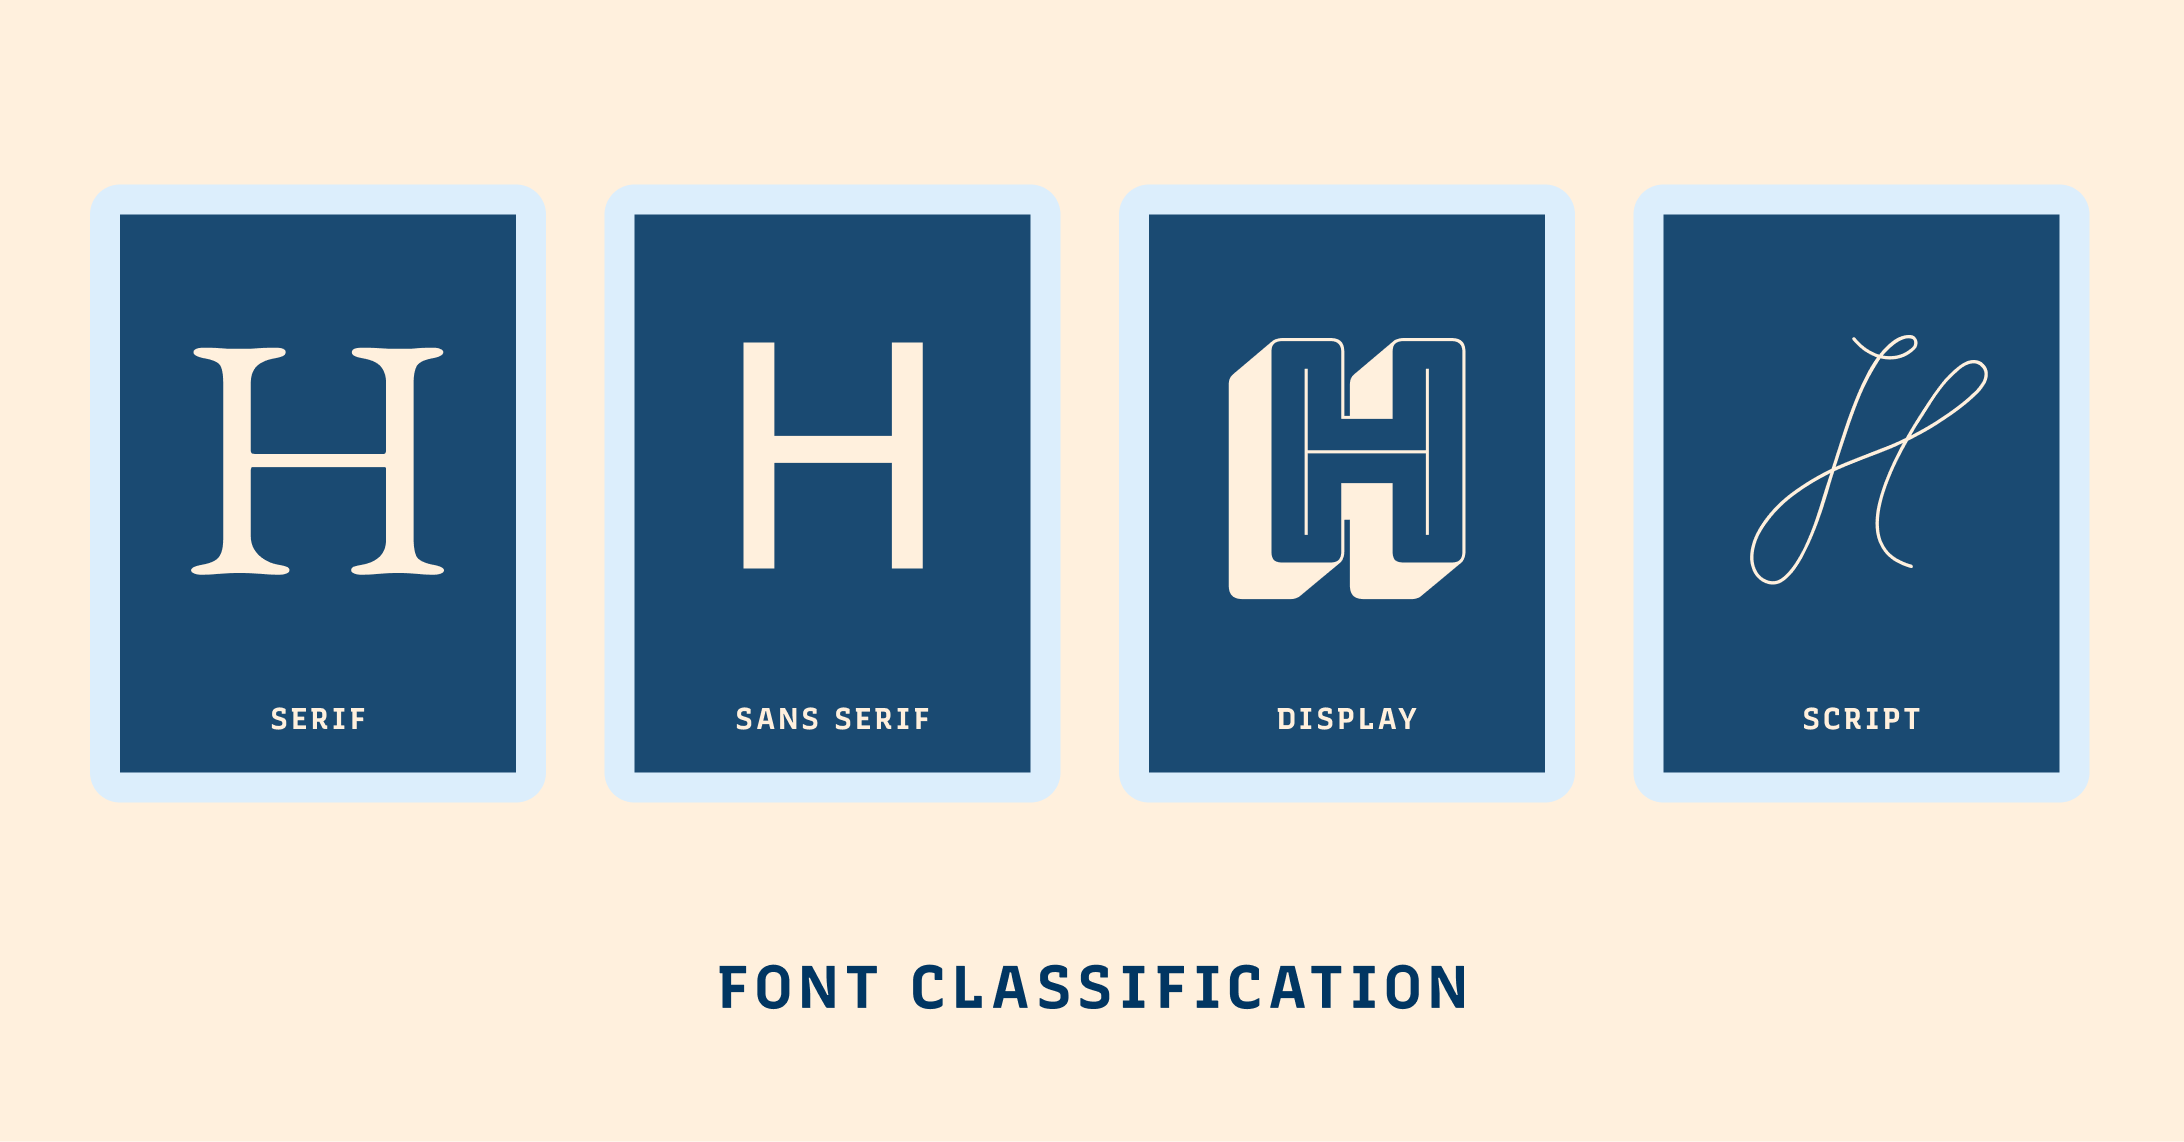 Four general font classification categories: serif, sans serif, display, script